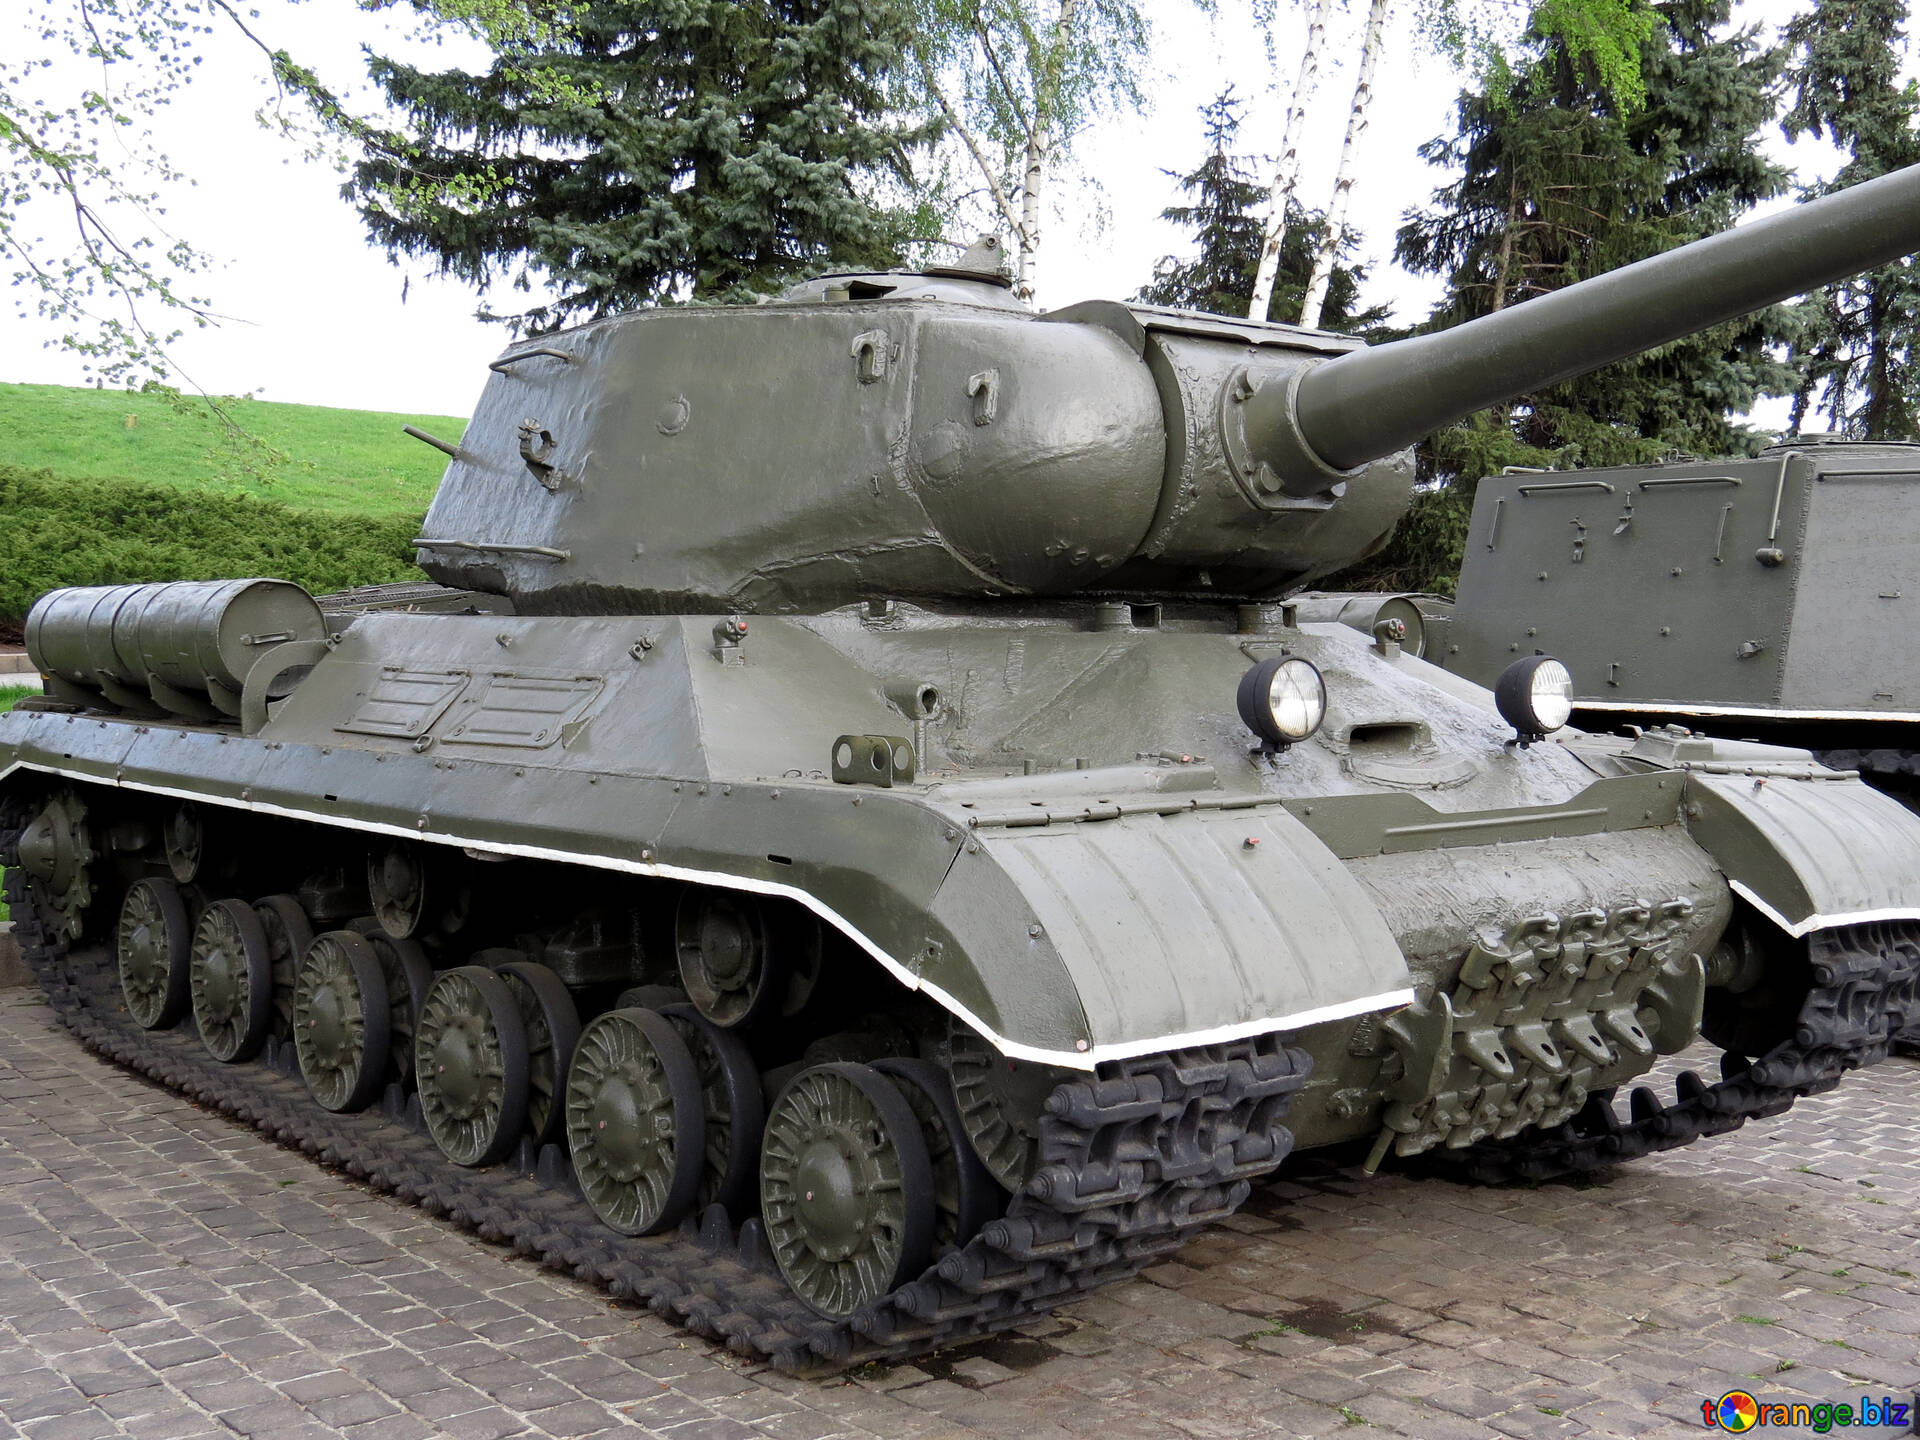 Фотогалереи ис. Танк ИС-1. Танк Иосиф Сталин 1. Танки ИС 1 И ИС 2. . ИС-1 (ИС-85) - тяжёлый танк.